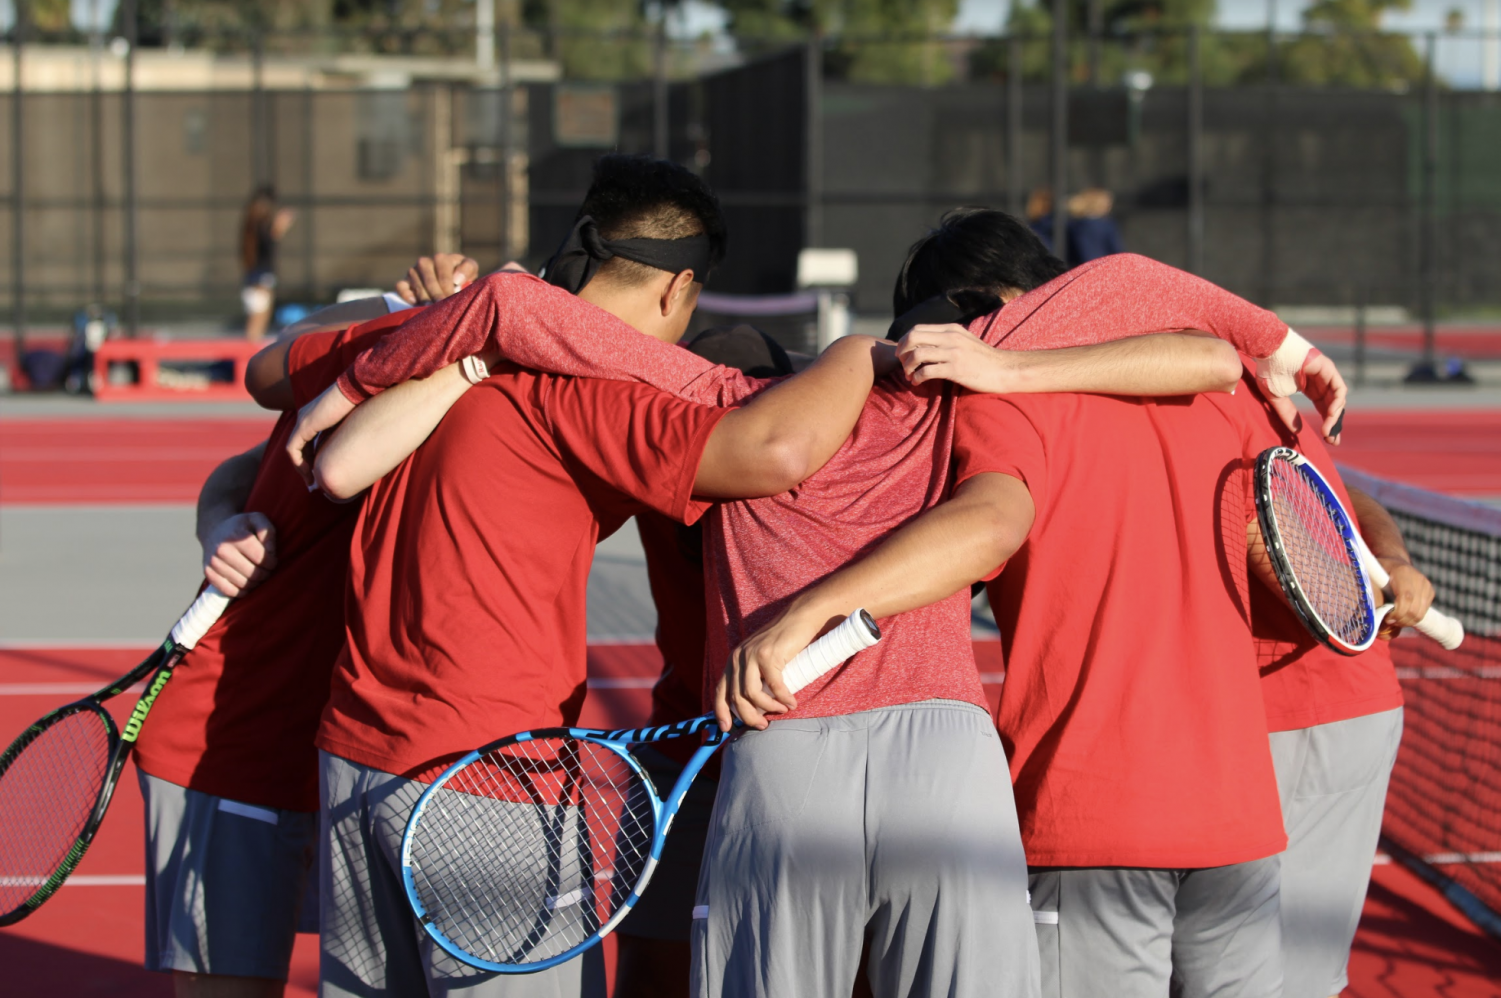 Men’s tennis shuts out San Diego Christian